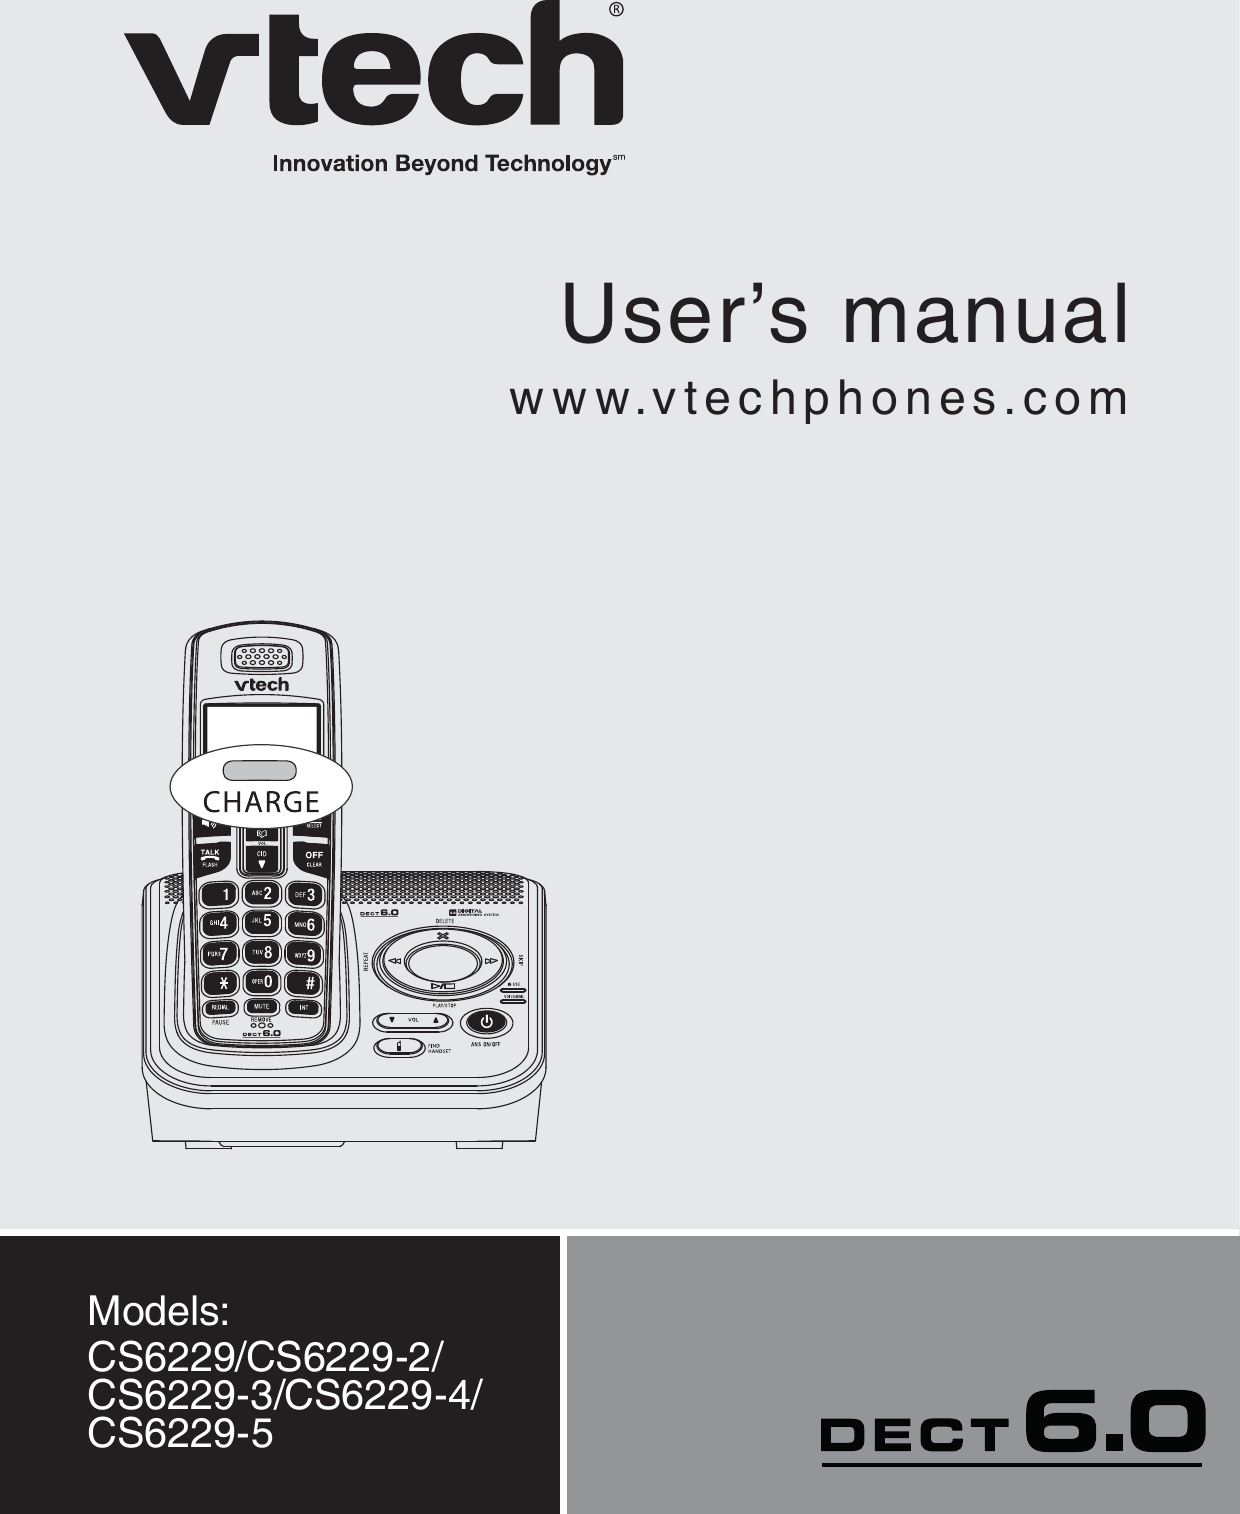 User’s manualwww.vtechphones.comModels: CS6229/CS6229-2/CS6229-3/CS6229-4/CS6229-5